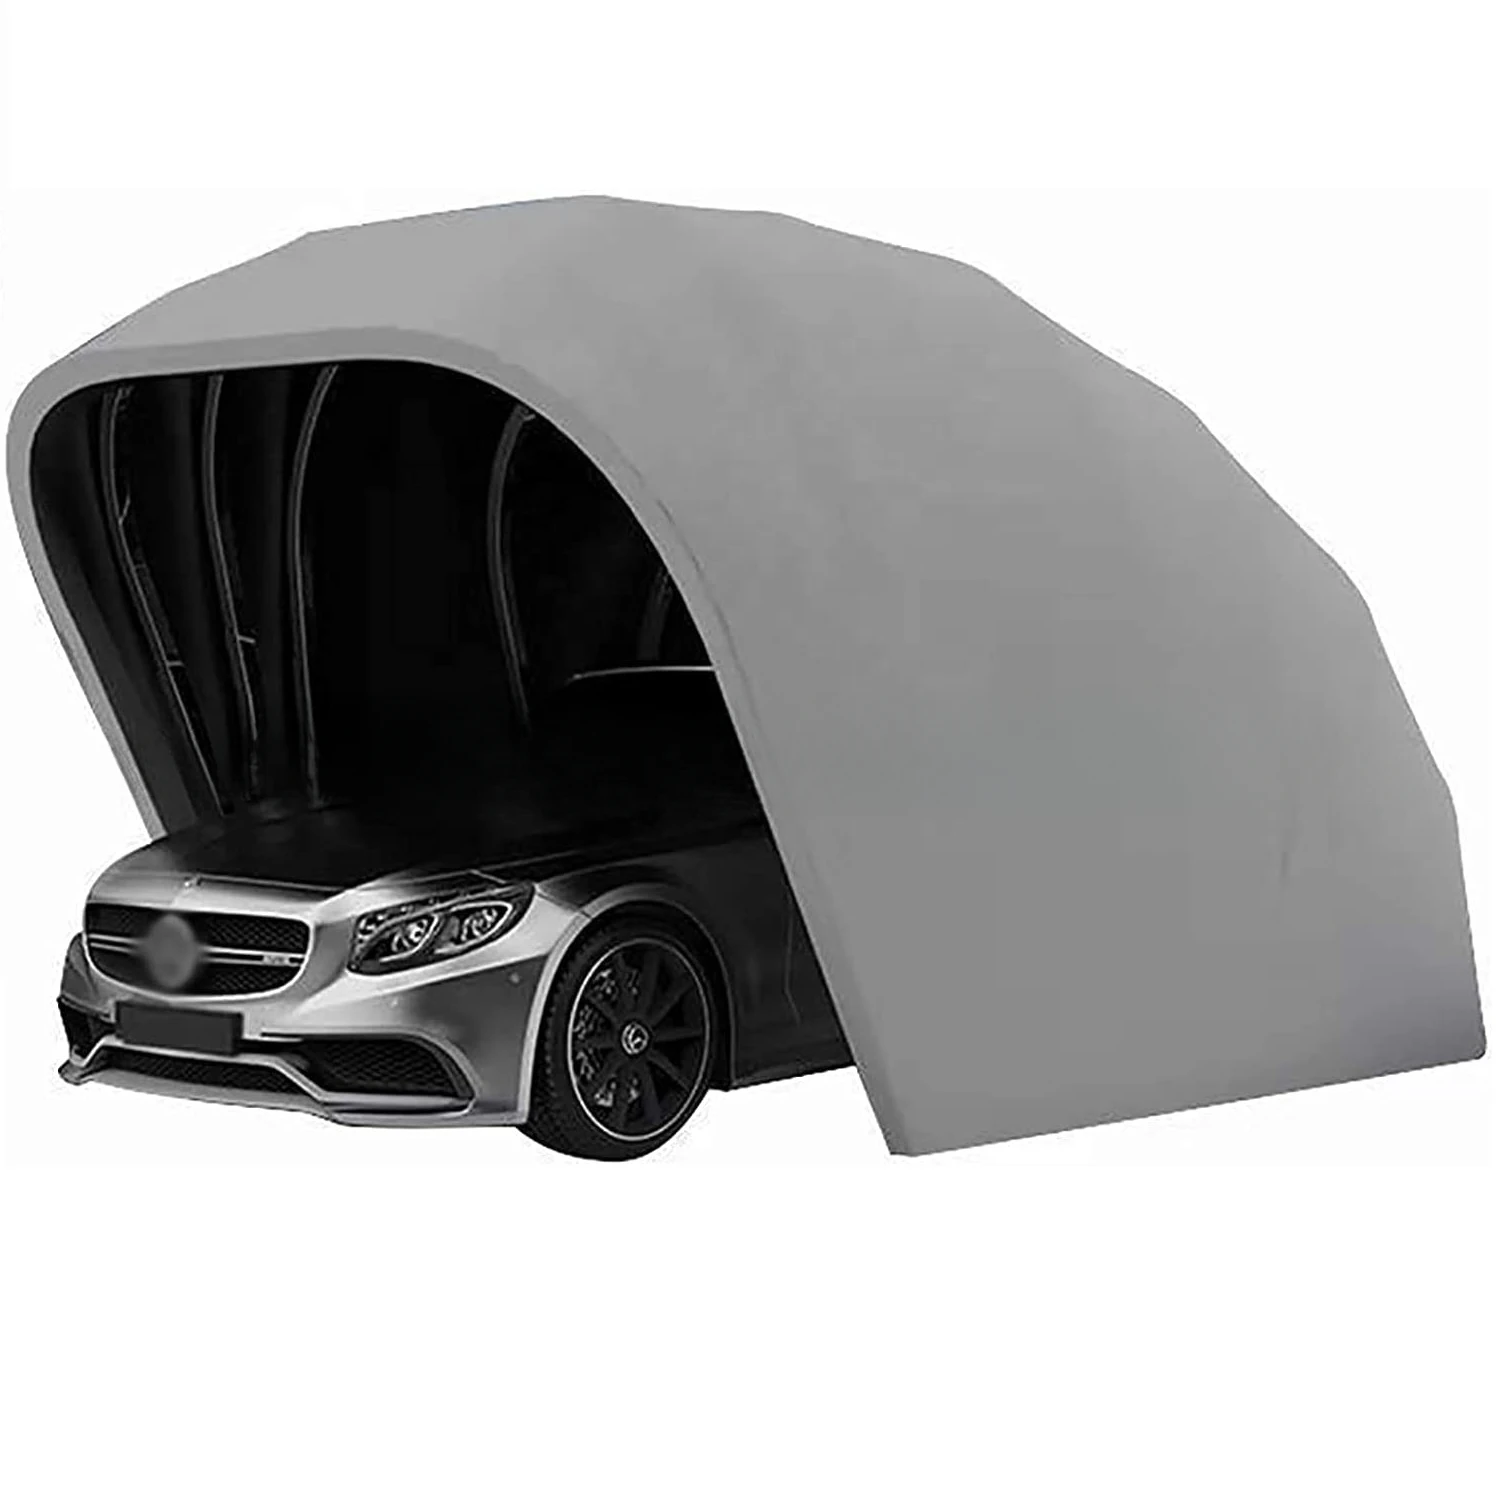 

Durable Foldable Garden Car Port Garage Shed Shelter Canopy Tent Steel Structure Design